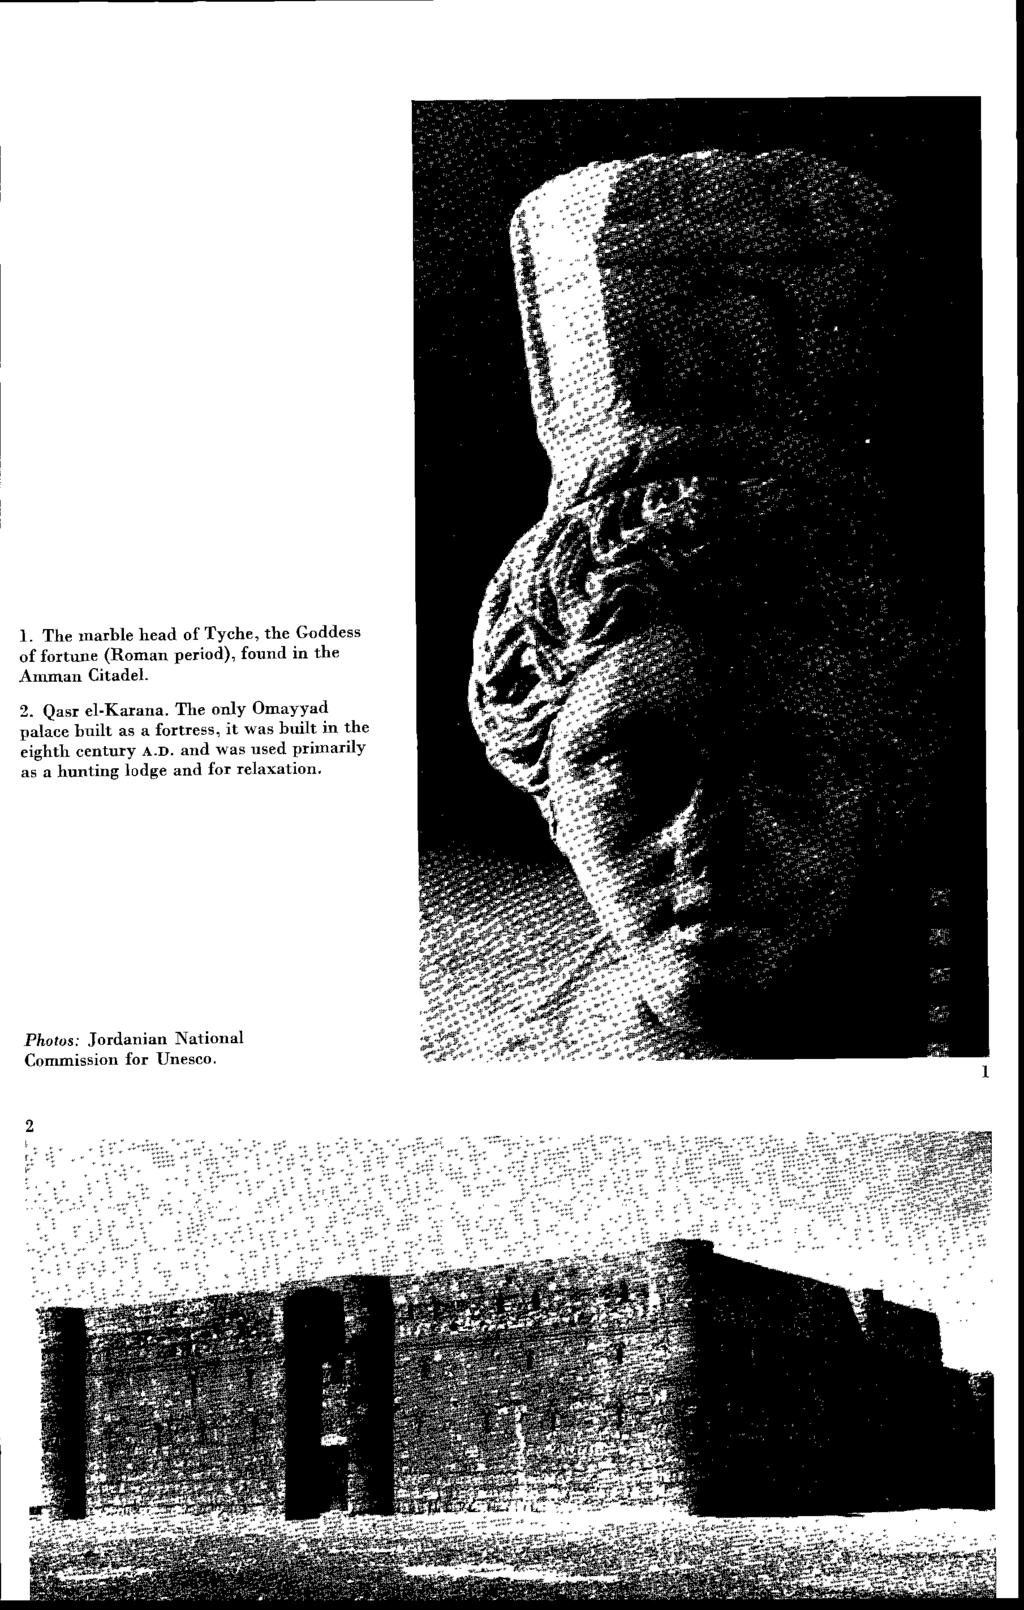 1. The marble head of Tyche, the Goddess of fortune (Roman period), found in the Amman Citadel. 2. Qasr el-karana.